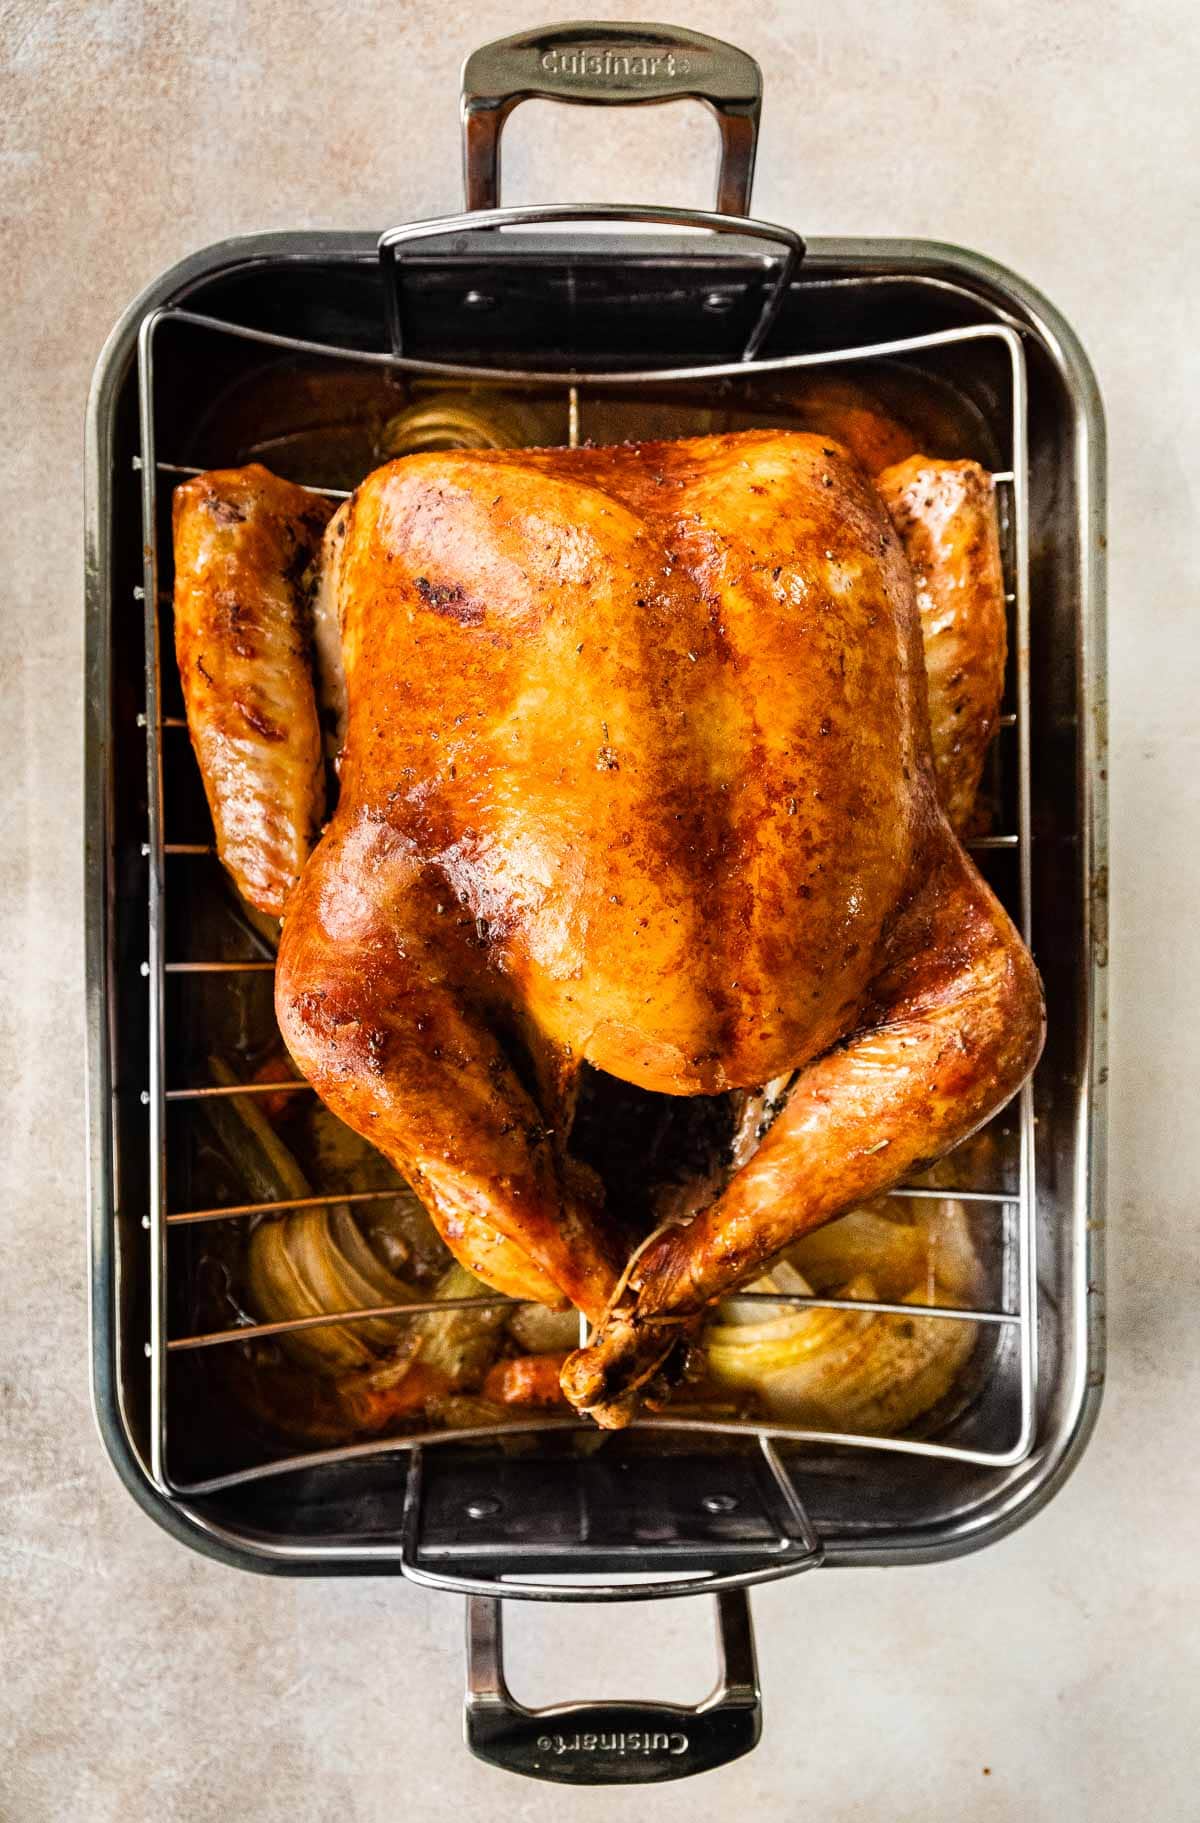 Butter Blanketed Turkey on roasting rack